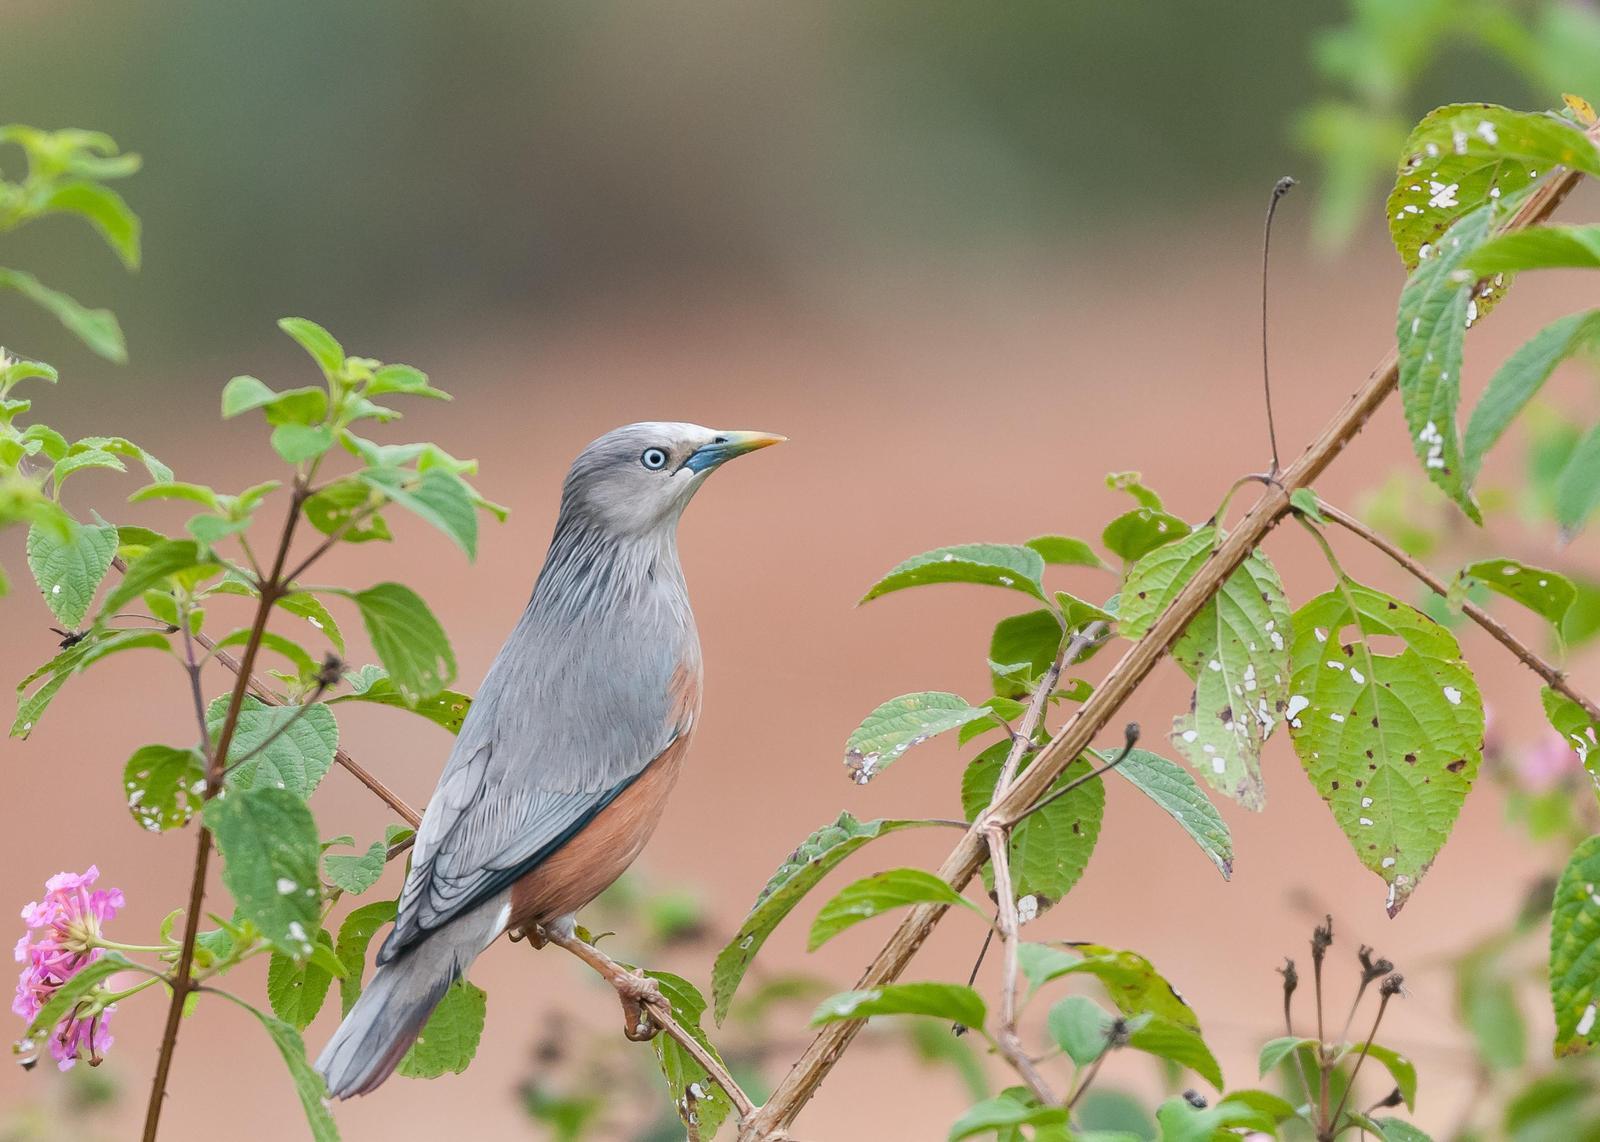 Chestnut-tailed Starling Photo by Kishore Bhargava